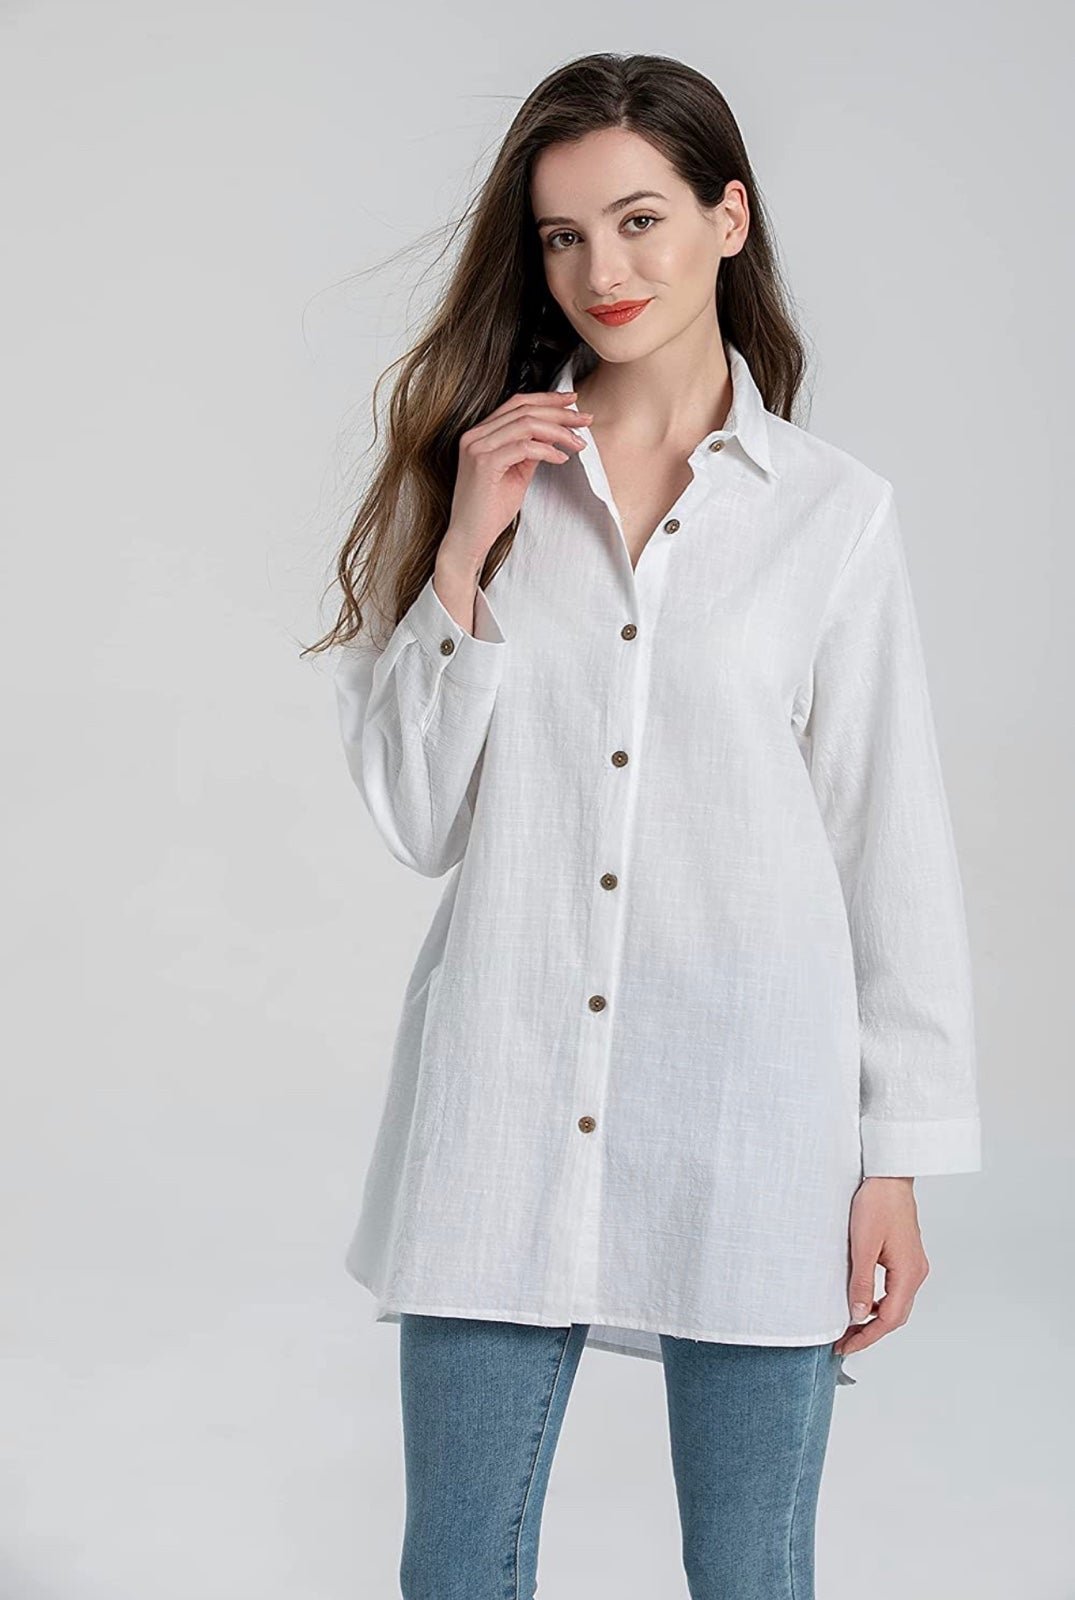 Discounted Women´s Long Sleeve Shirts Button Down Blouse Cotton Tunic High Low Tops NCVHAaXeu just for you